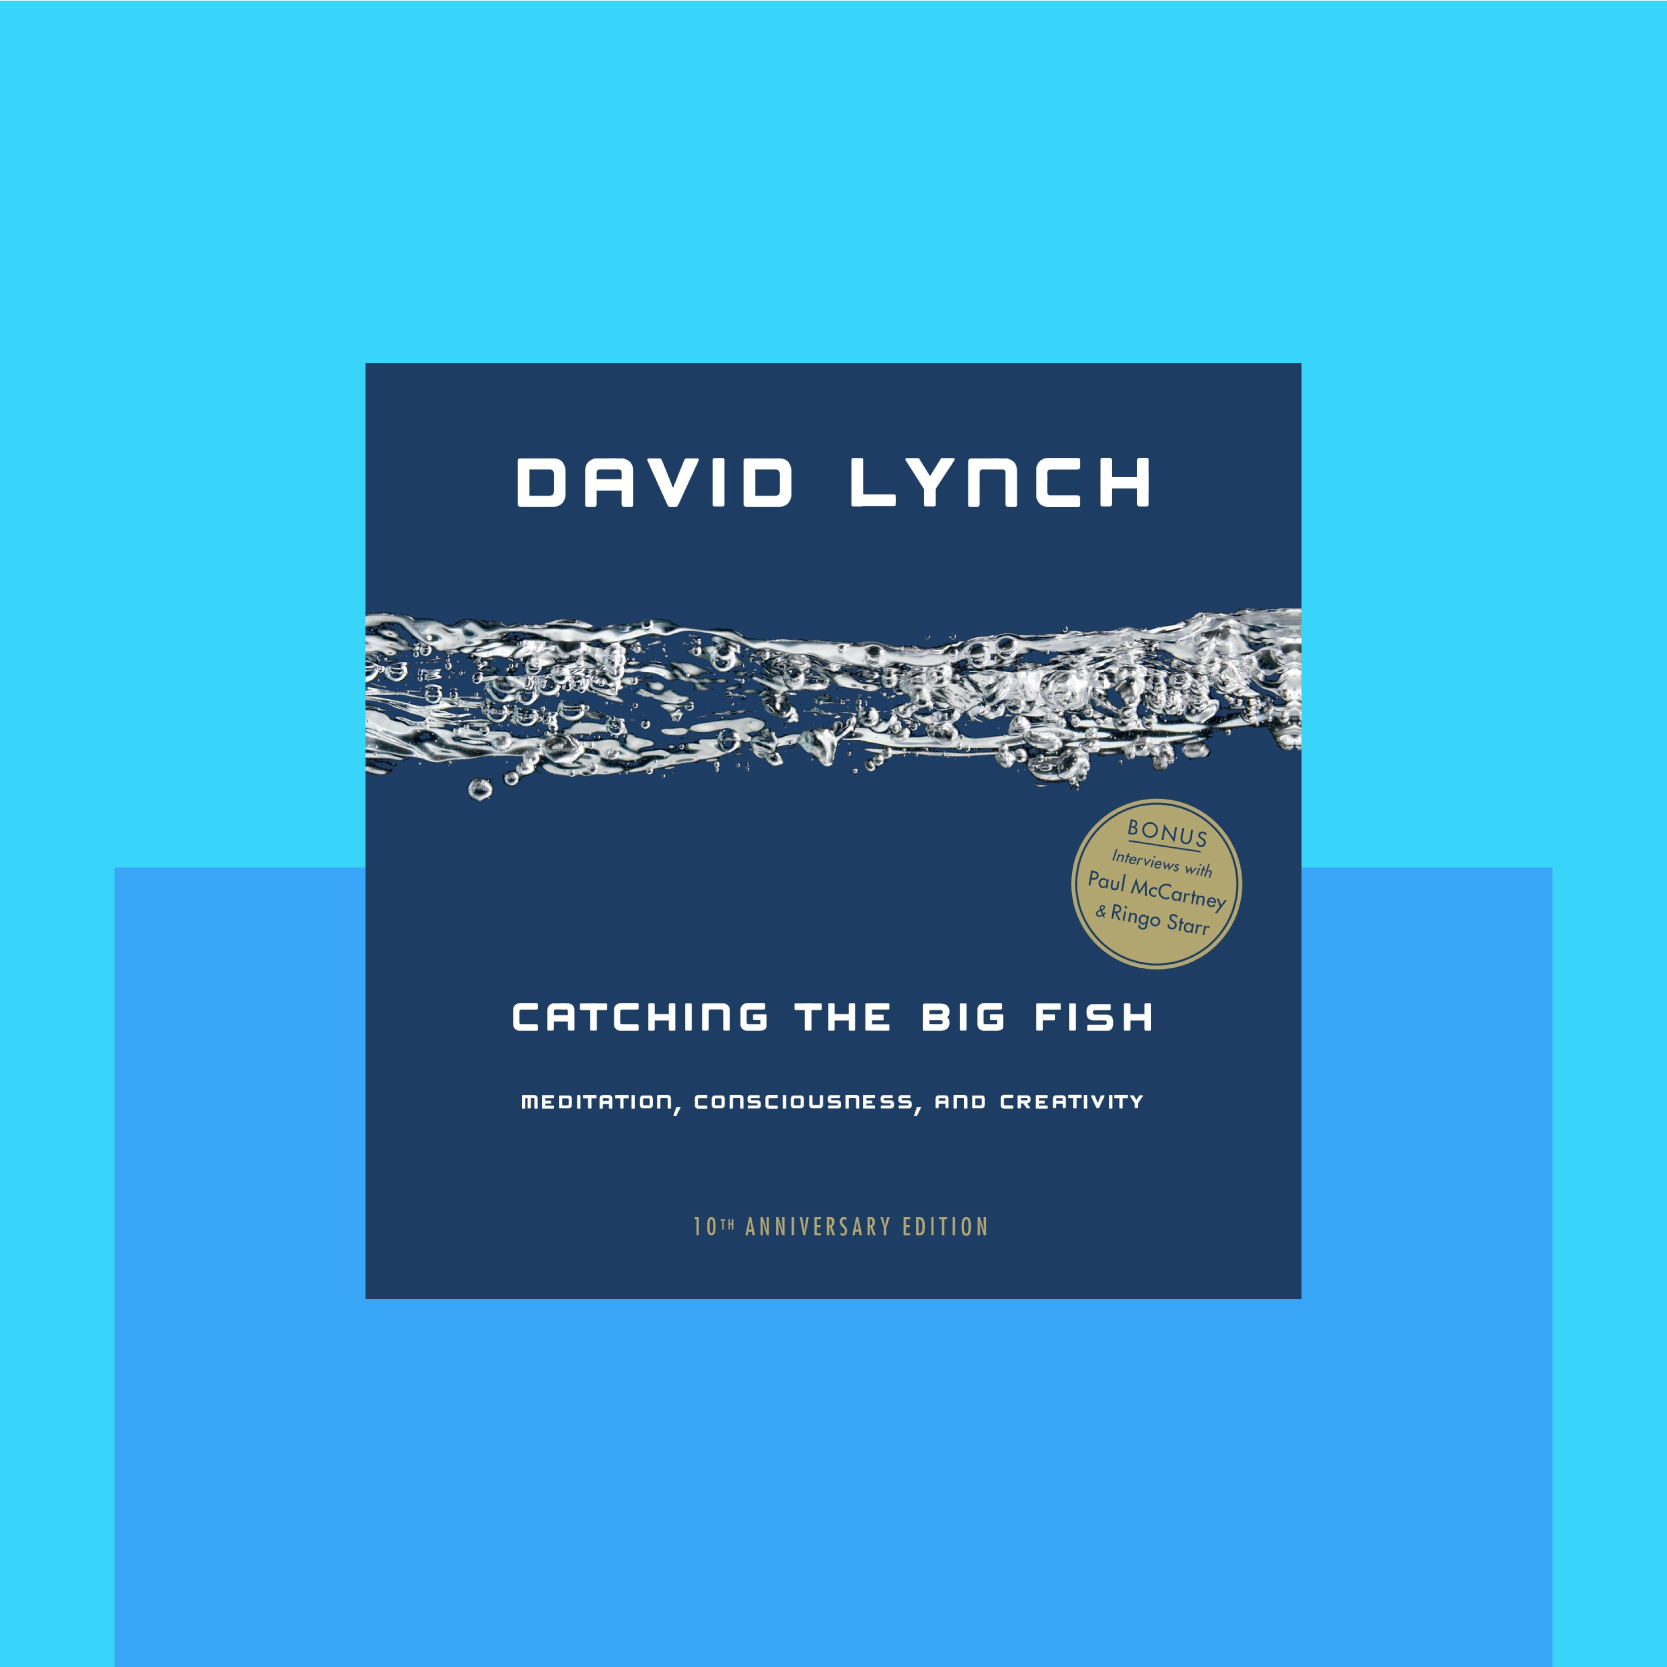 https://images.squarespace-cdn.com/content/v1/5b7d875e5417fcee056cd4a5/1540507652088-73EFLPJFETW0S4SM0P7O/David-Lynch-Catching-the-big-fish.jpg